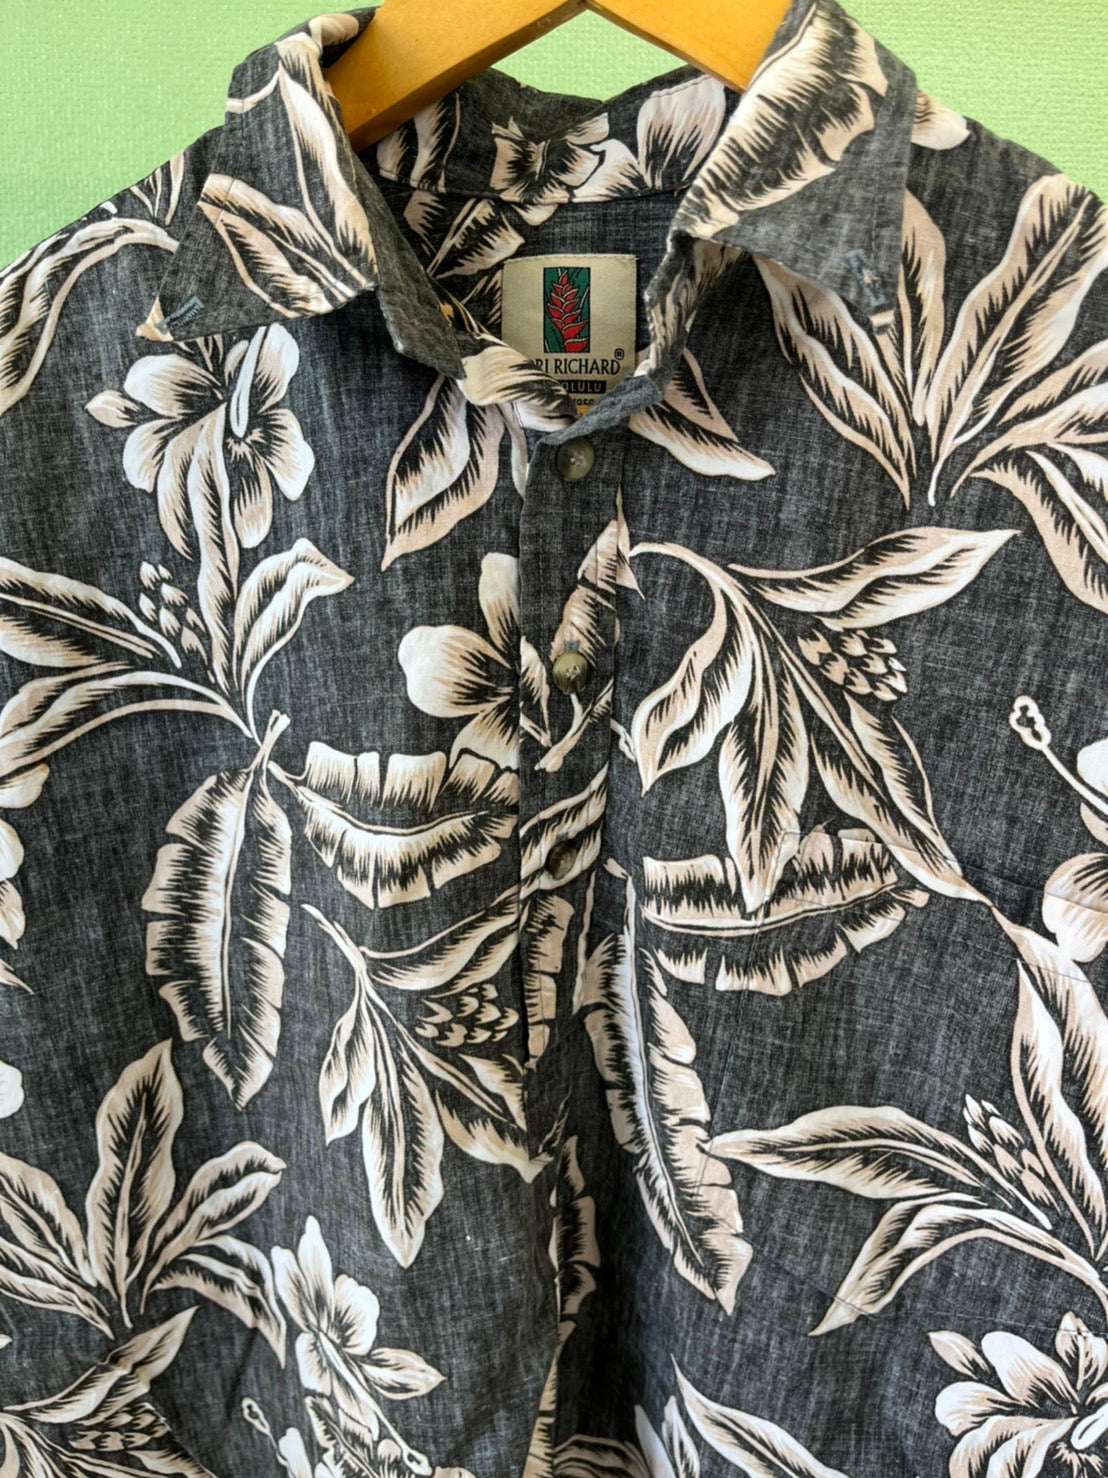 【Tori Richard】All Over Pattan Cotton Aloha Shirt made in Hawaiiトリ リチャード オールオーバーパターン ハイビスカス柄 コットン アロハシャツ （men's M)